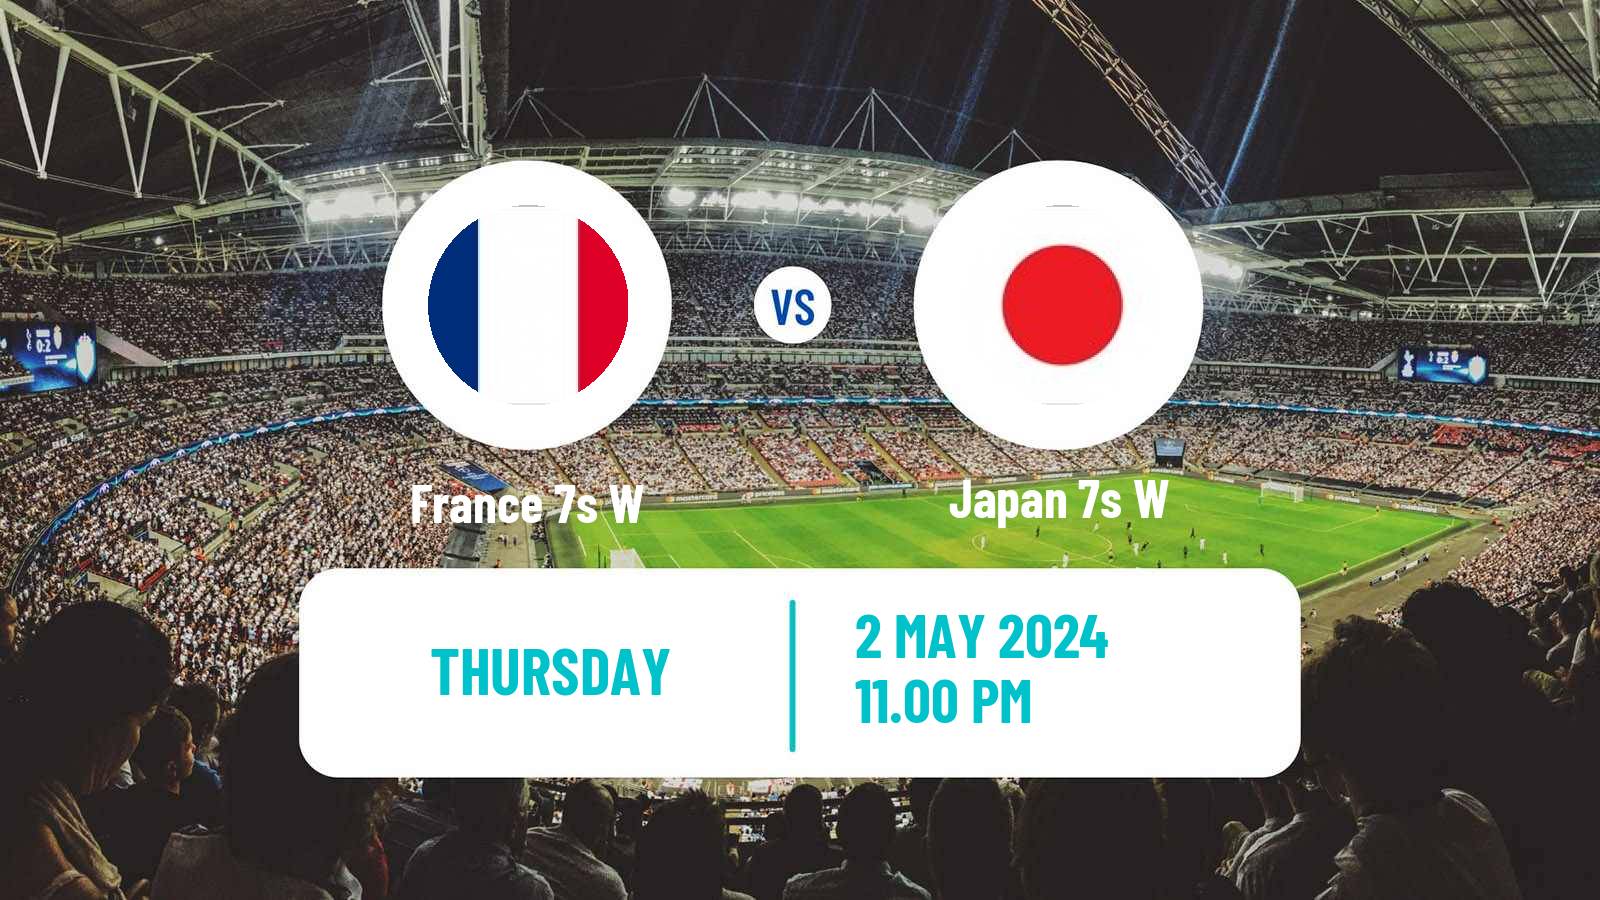 Soccer Sevens World Series Women - Singapore France 7s W - Japan 7s W